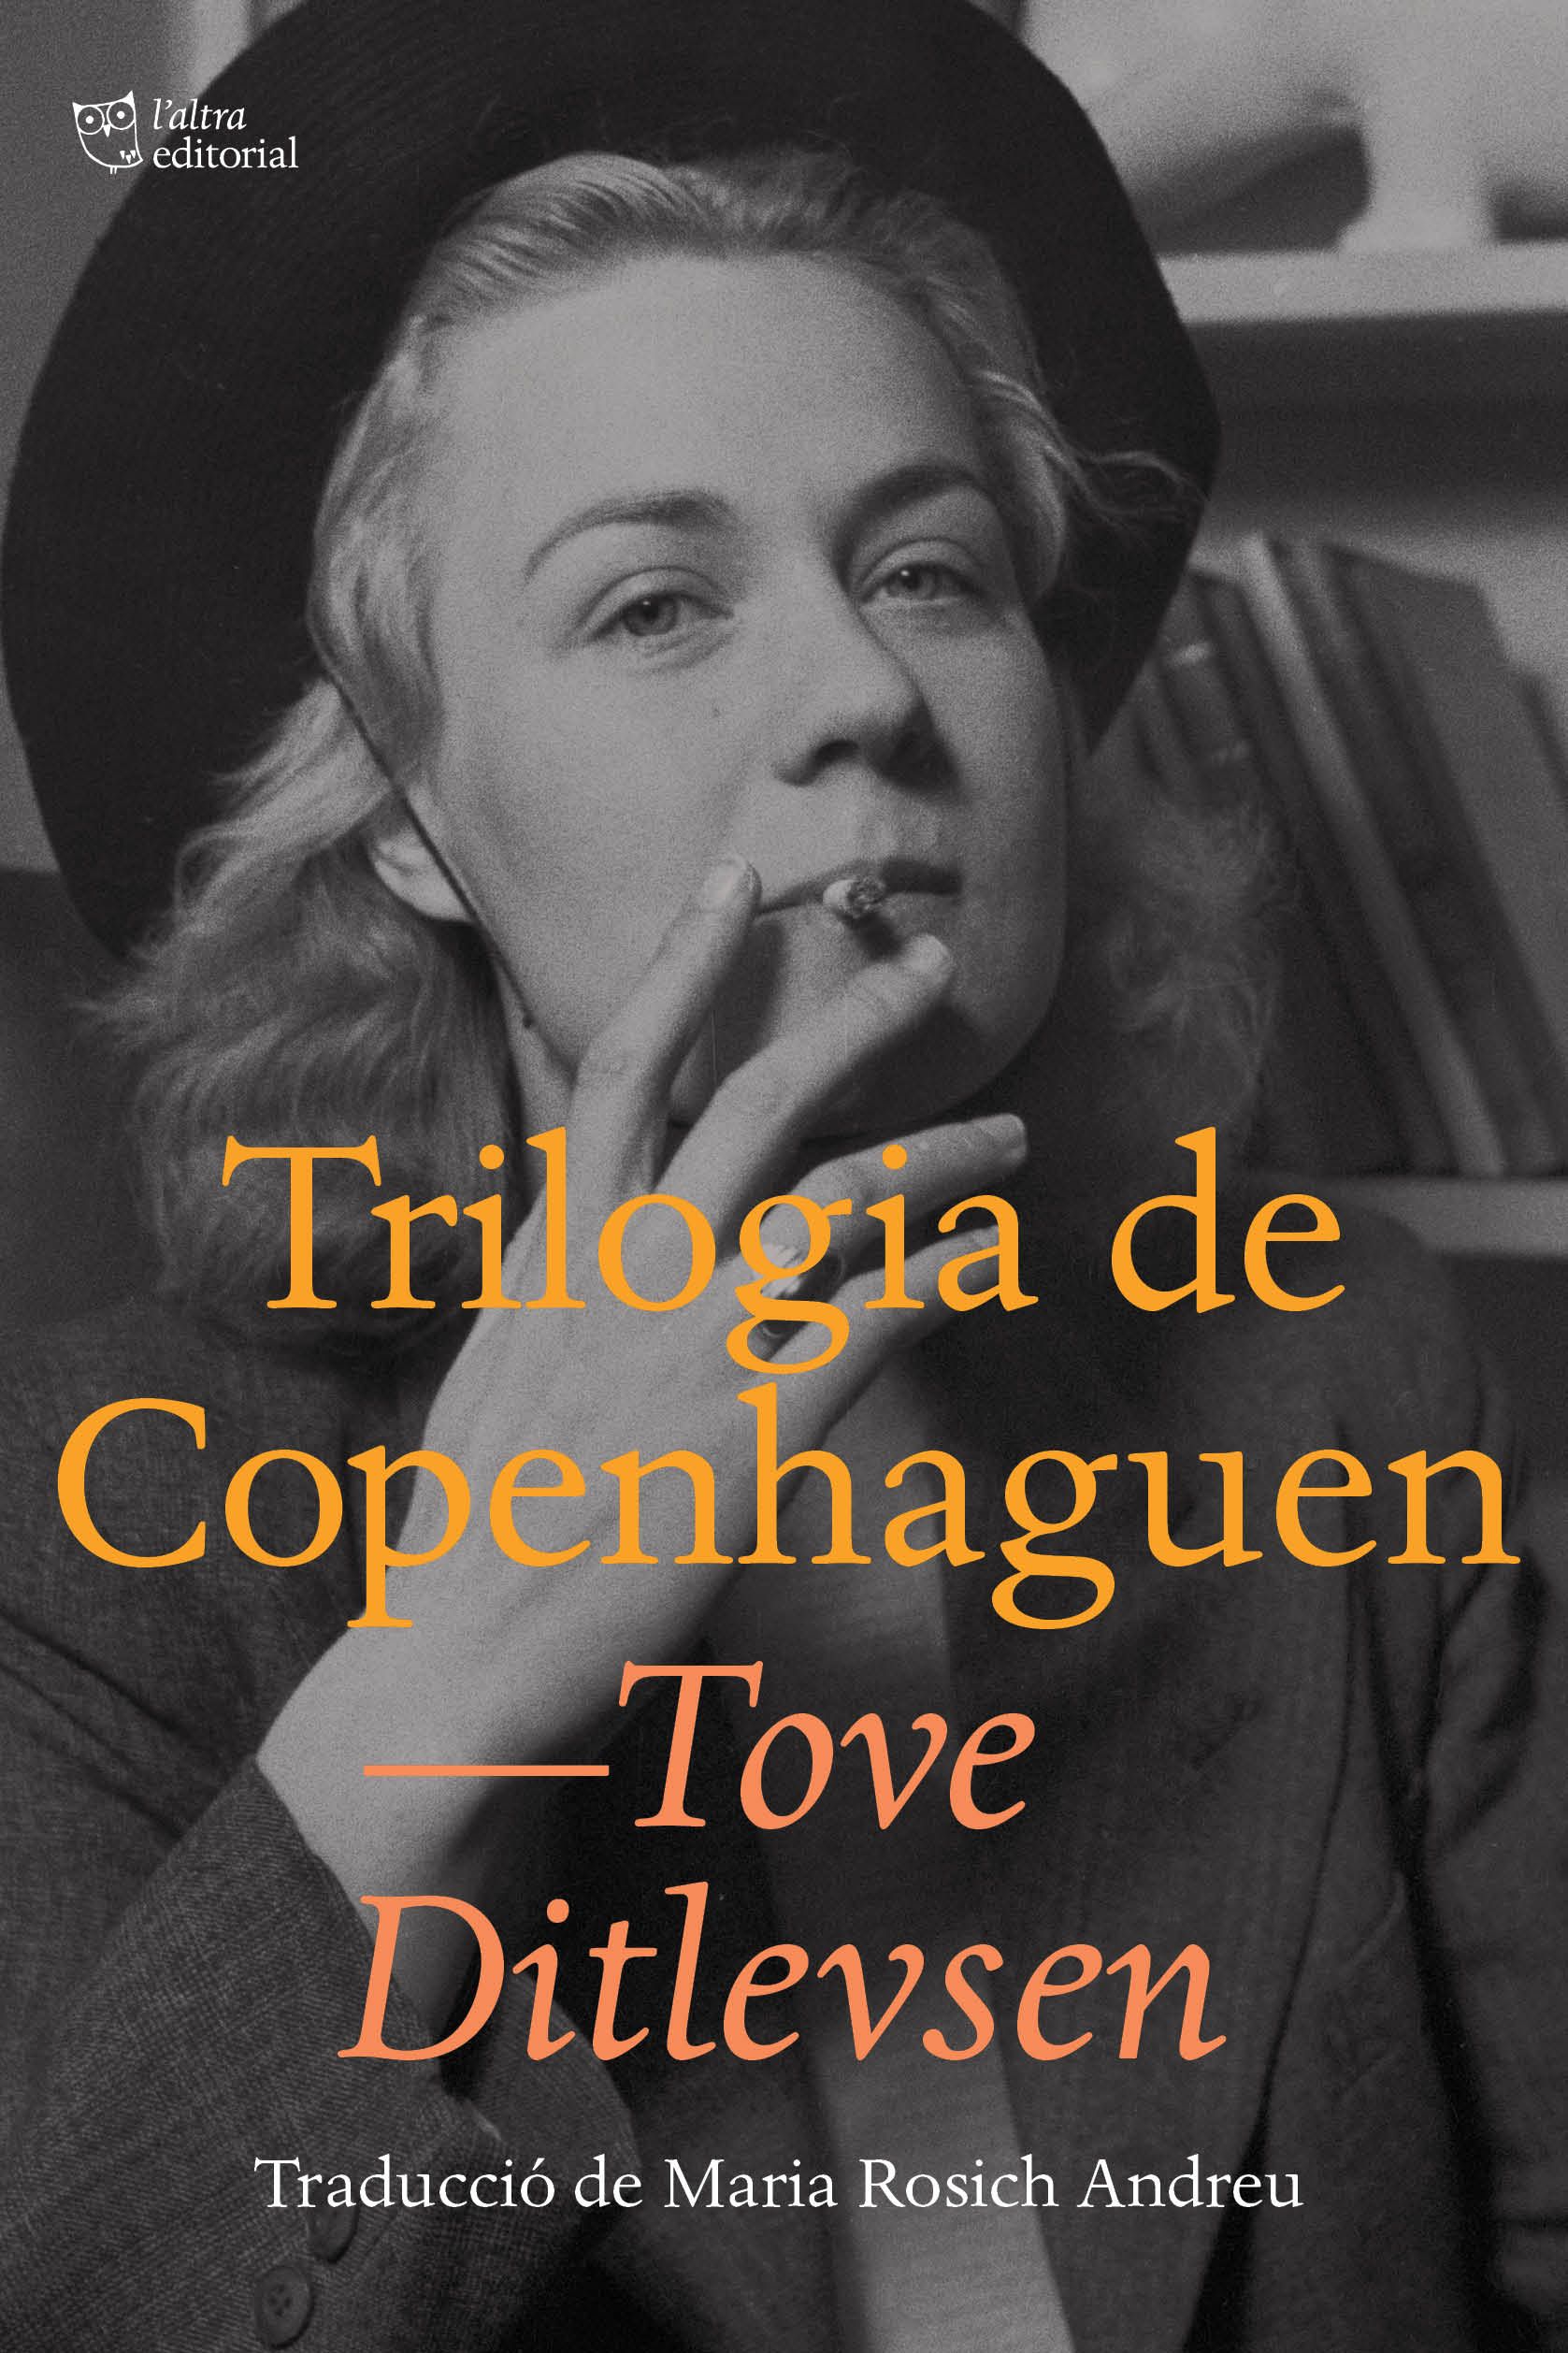 Trilogia de Copenhagen, de Tove Ditlevsen